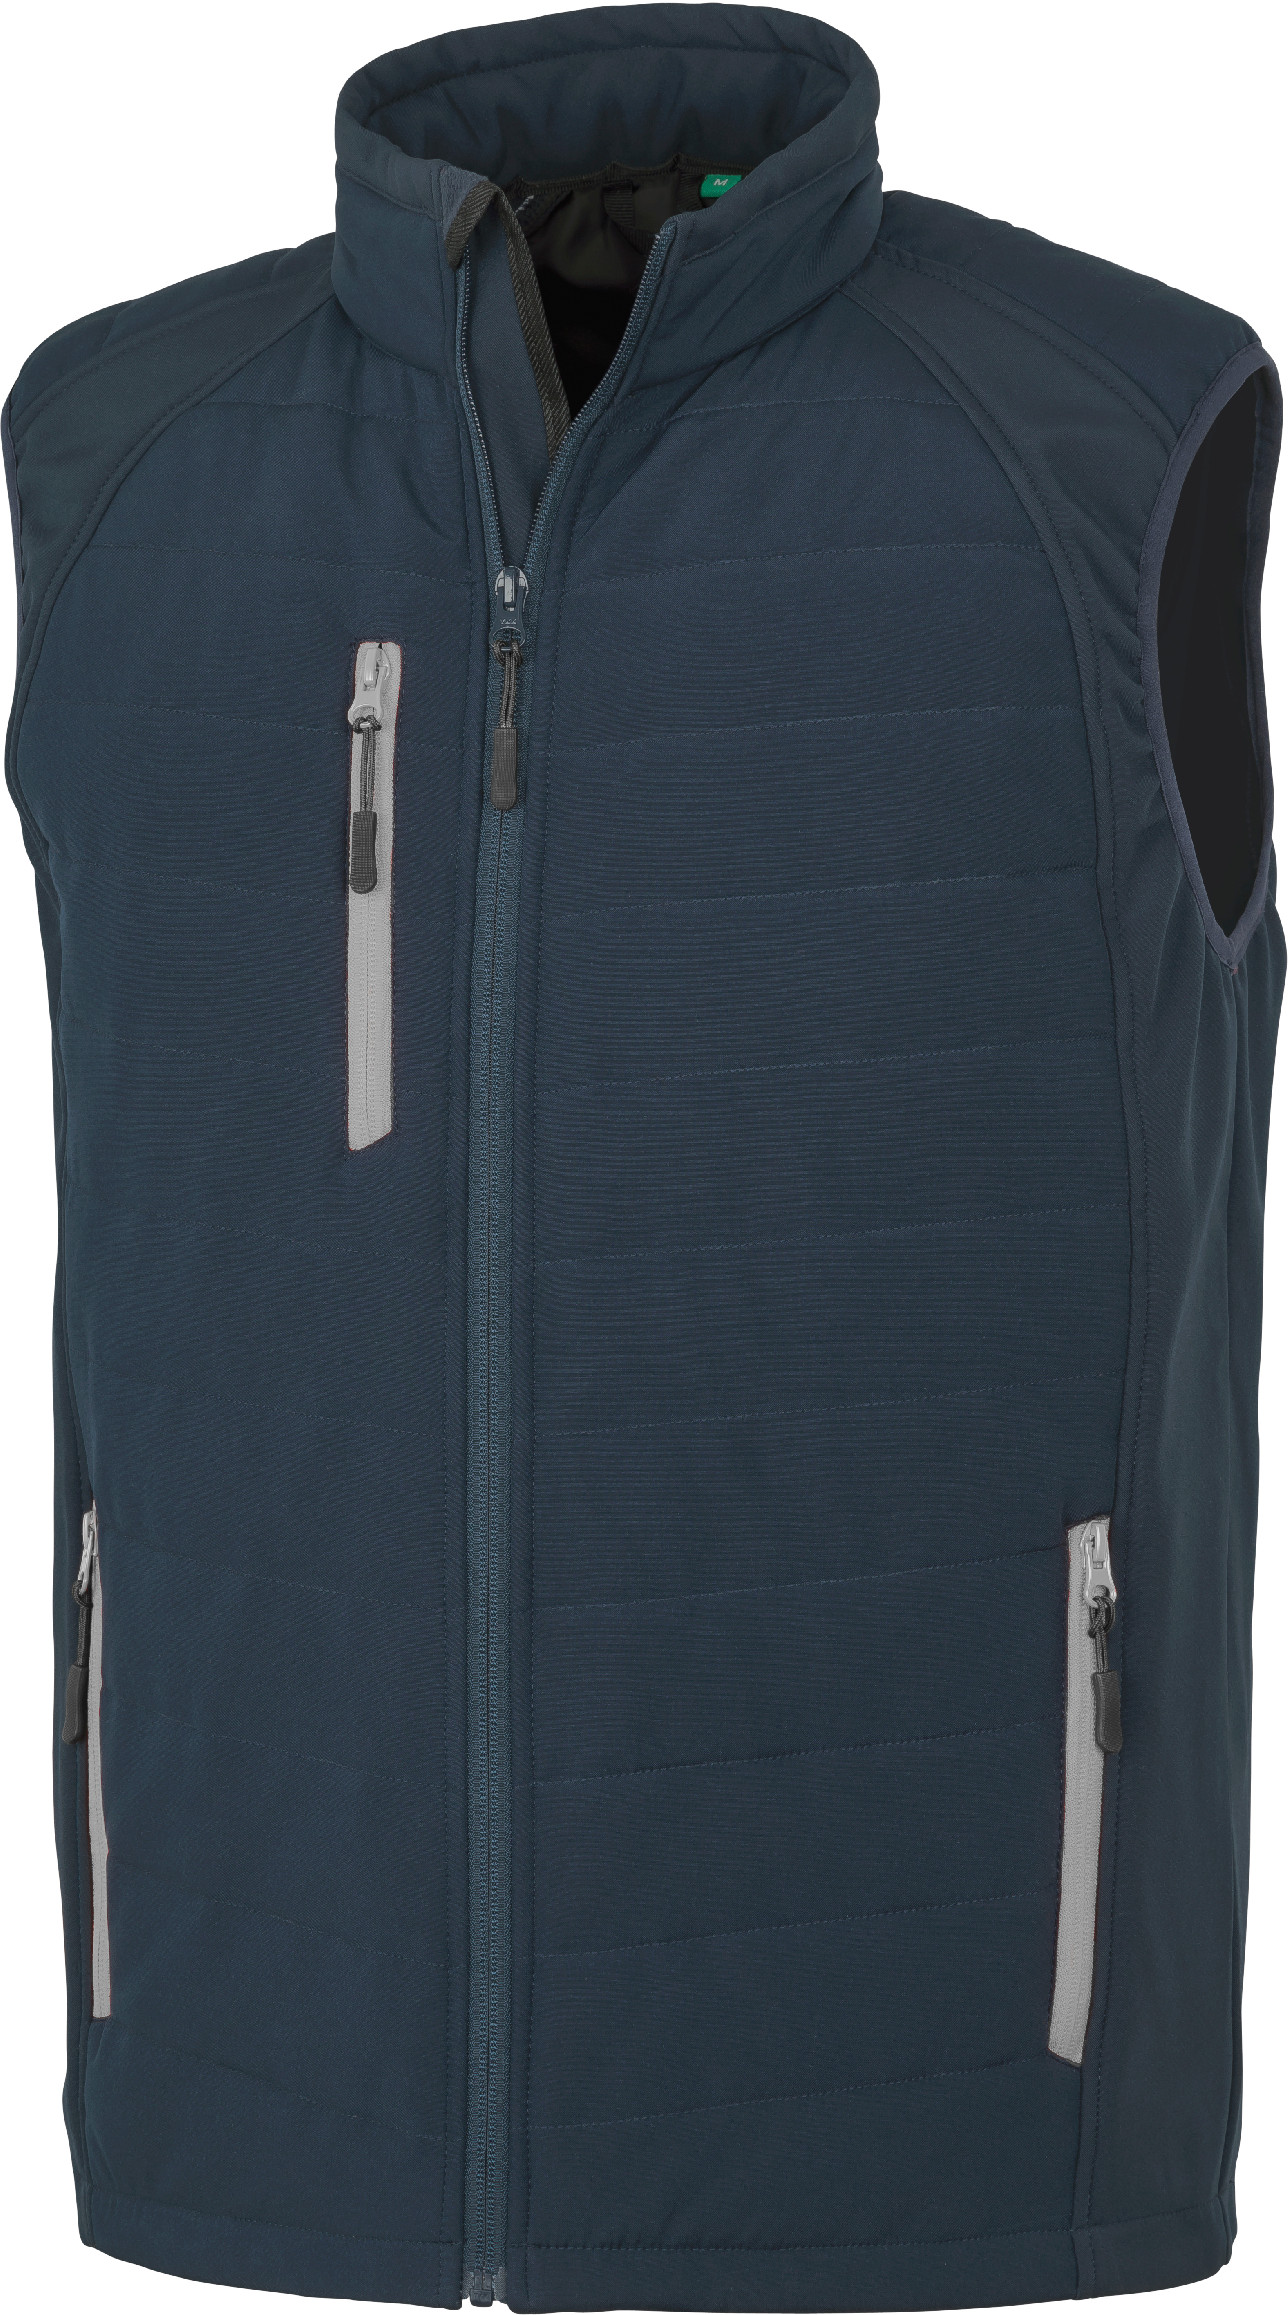 Polstrovaná softshell vesta Compass R238X Barva: námořní modrá-šedá, Velikost: XL